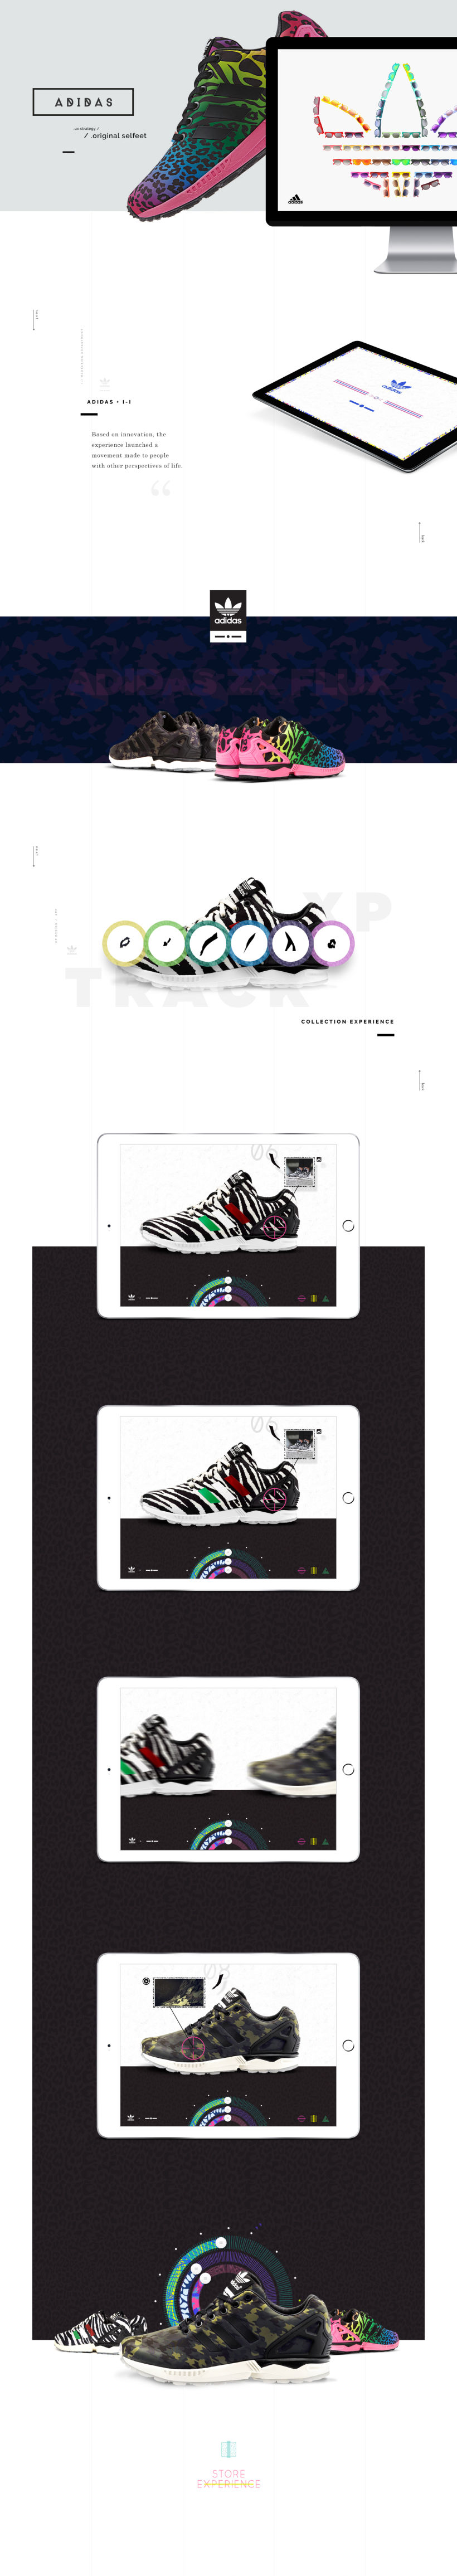 Adidas Original Selfeet | Full XP 0